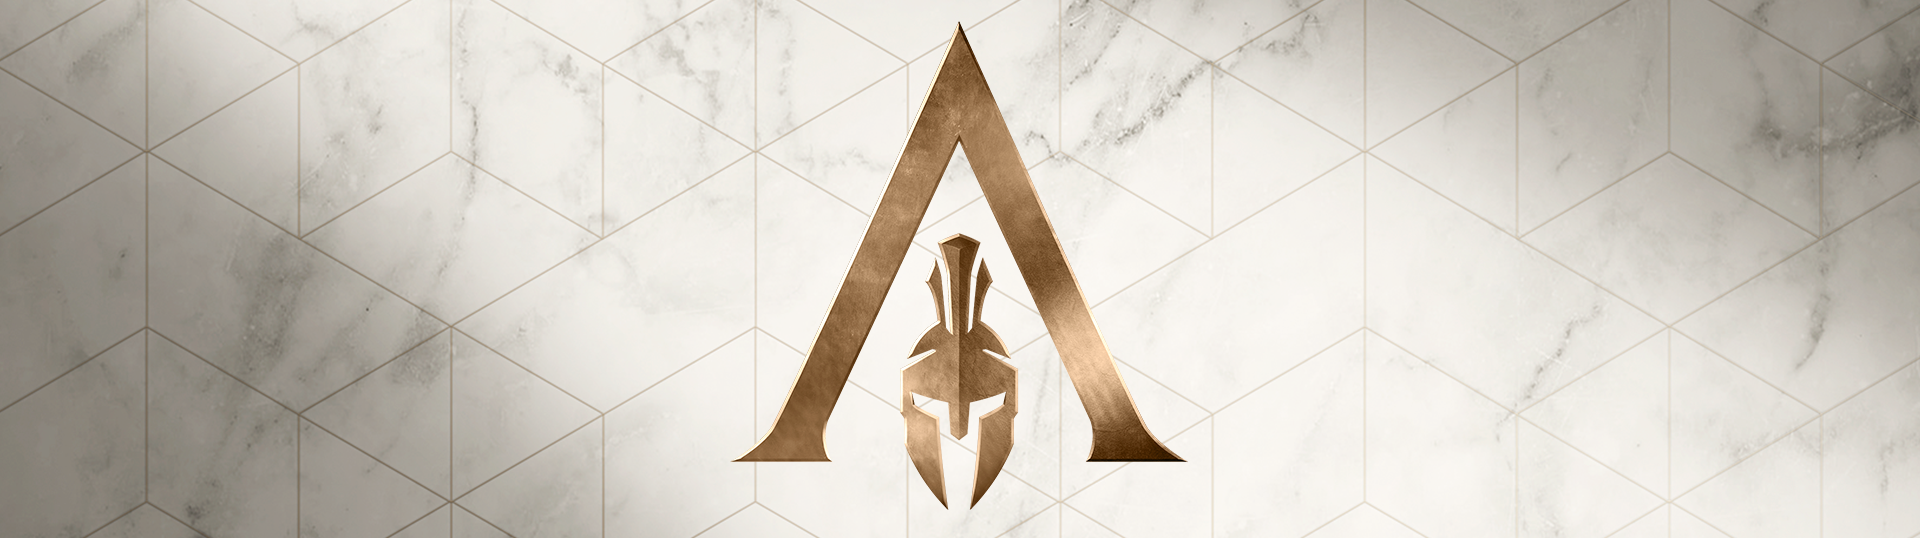 Xbox Assassin's Creed Helix Credits